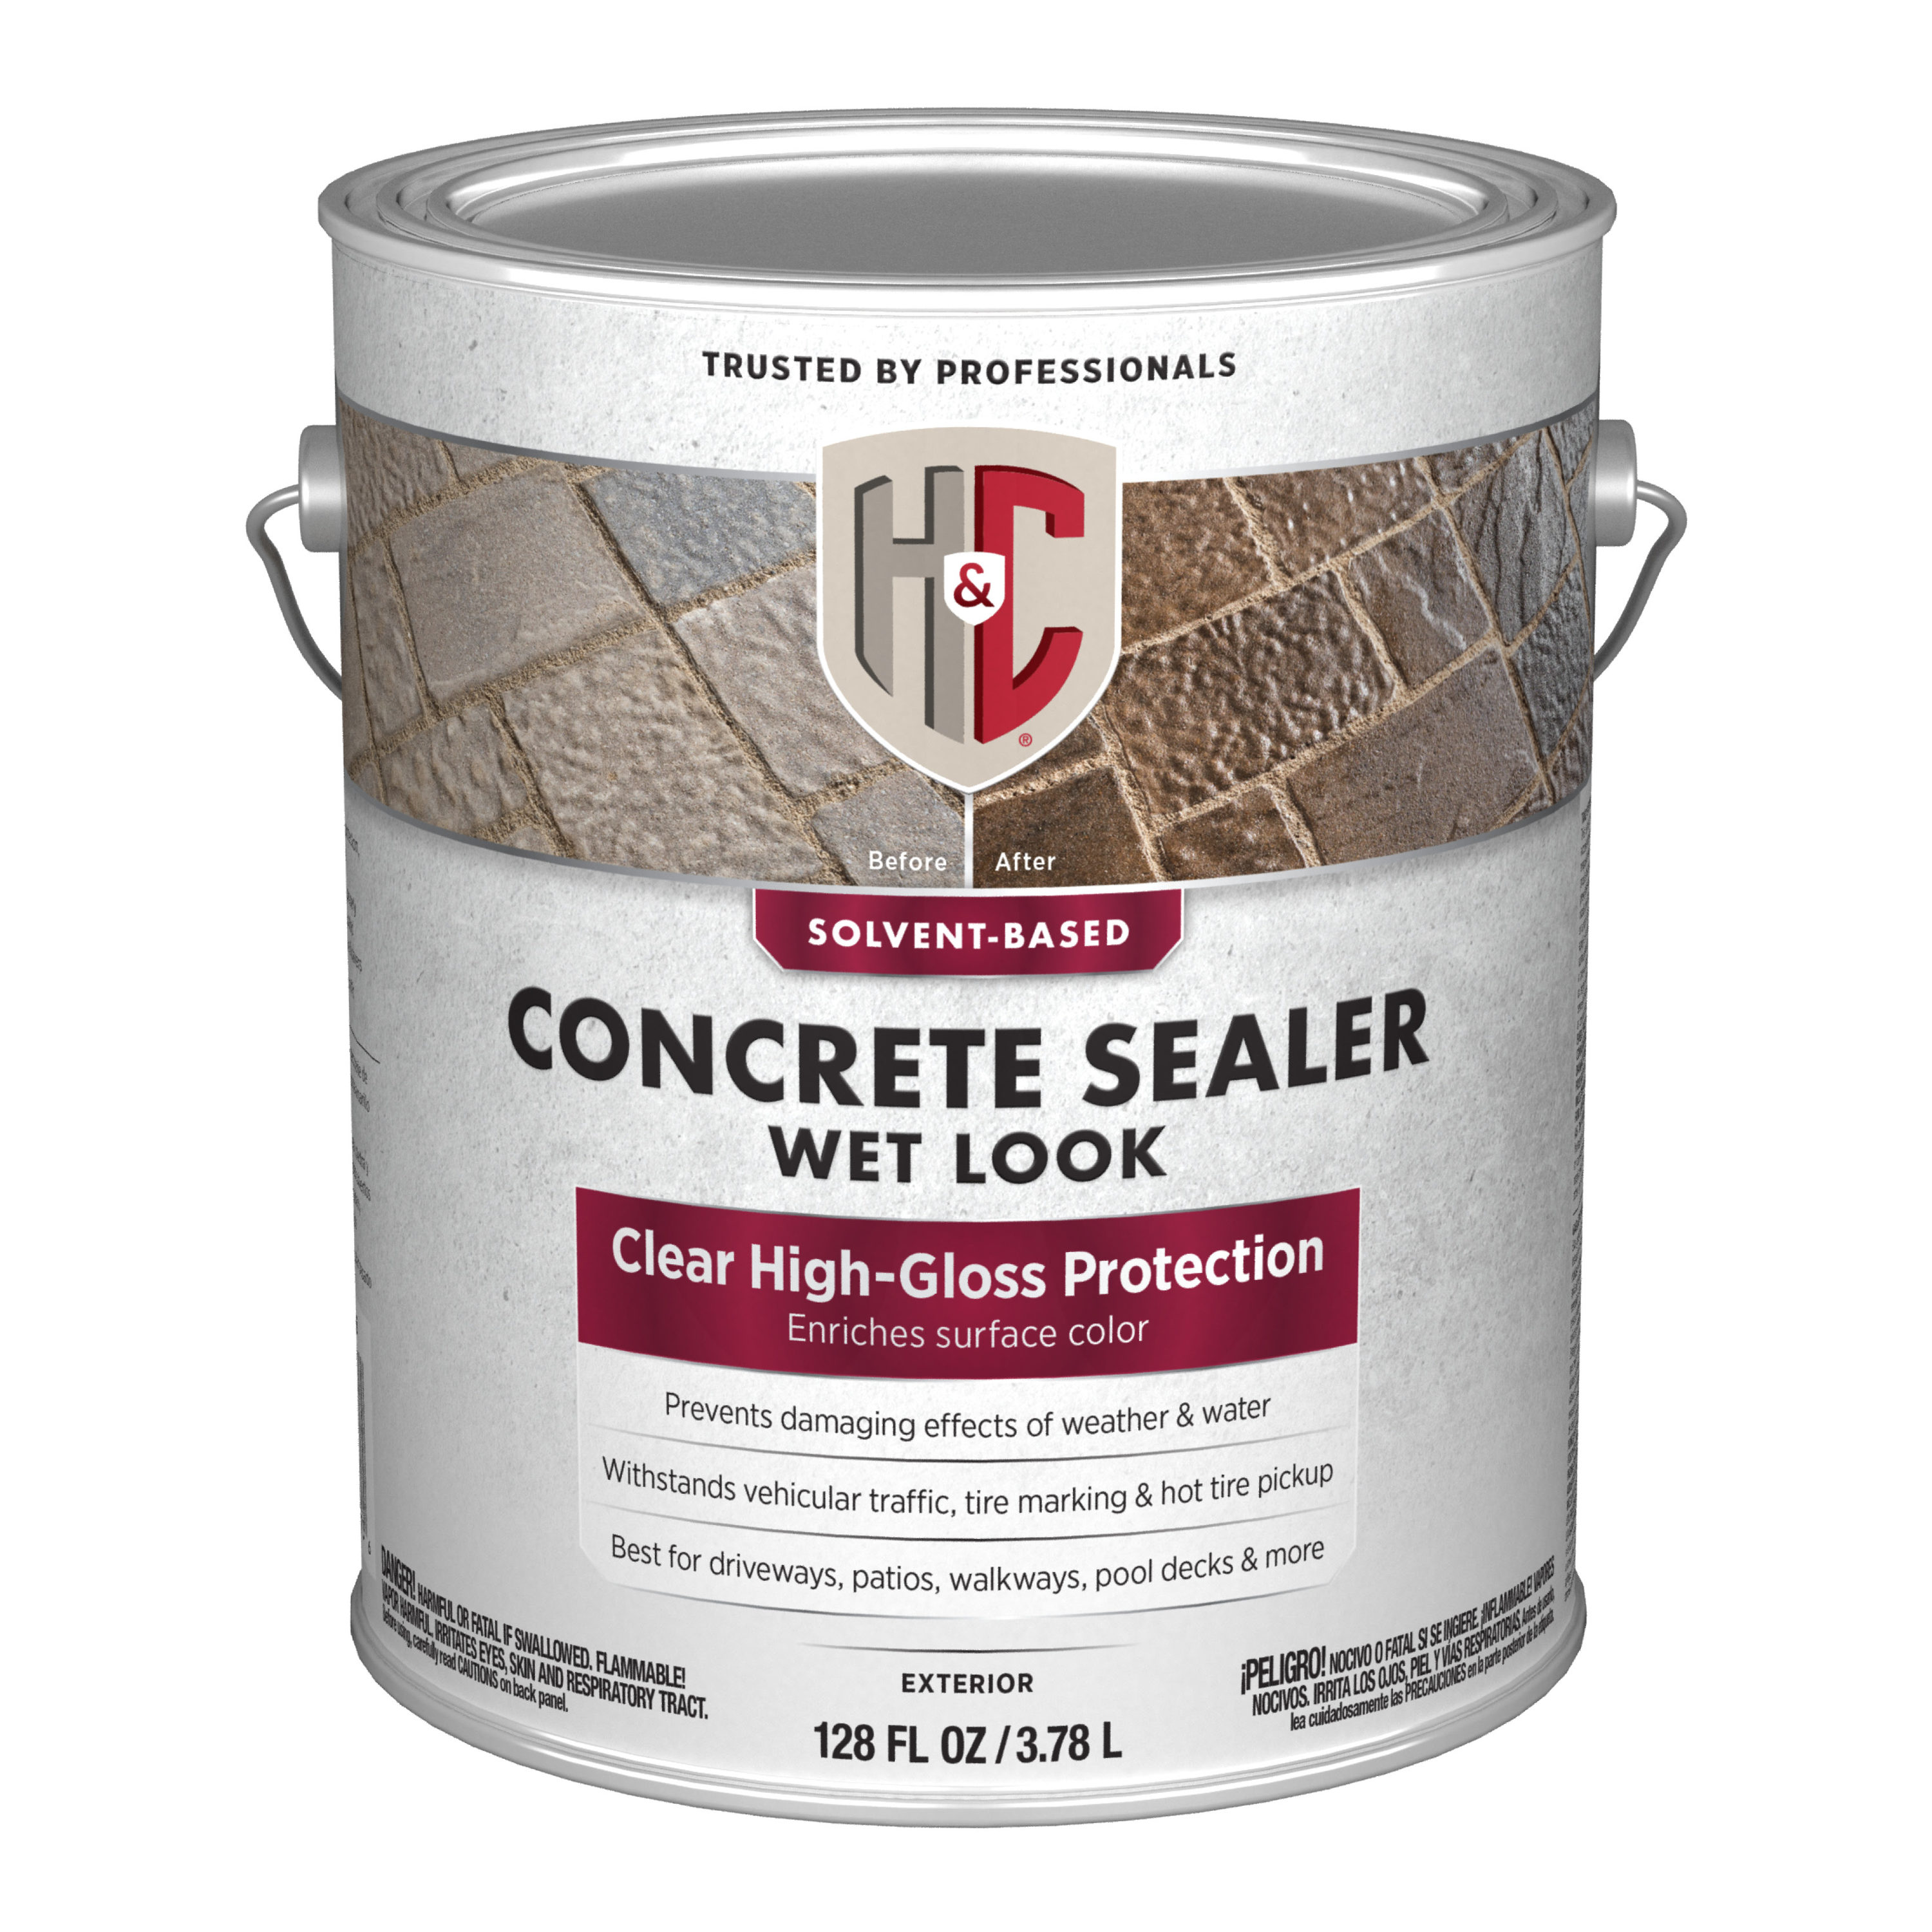 Surecrete Super WB Water-Based Clear Acrylic Concrete Sealer - 5 Gallon High Gloss